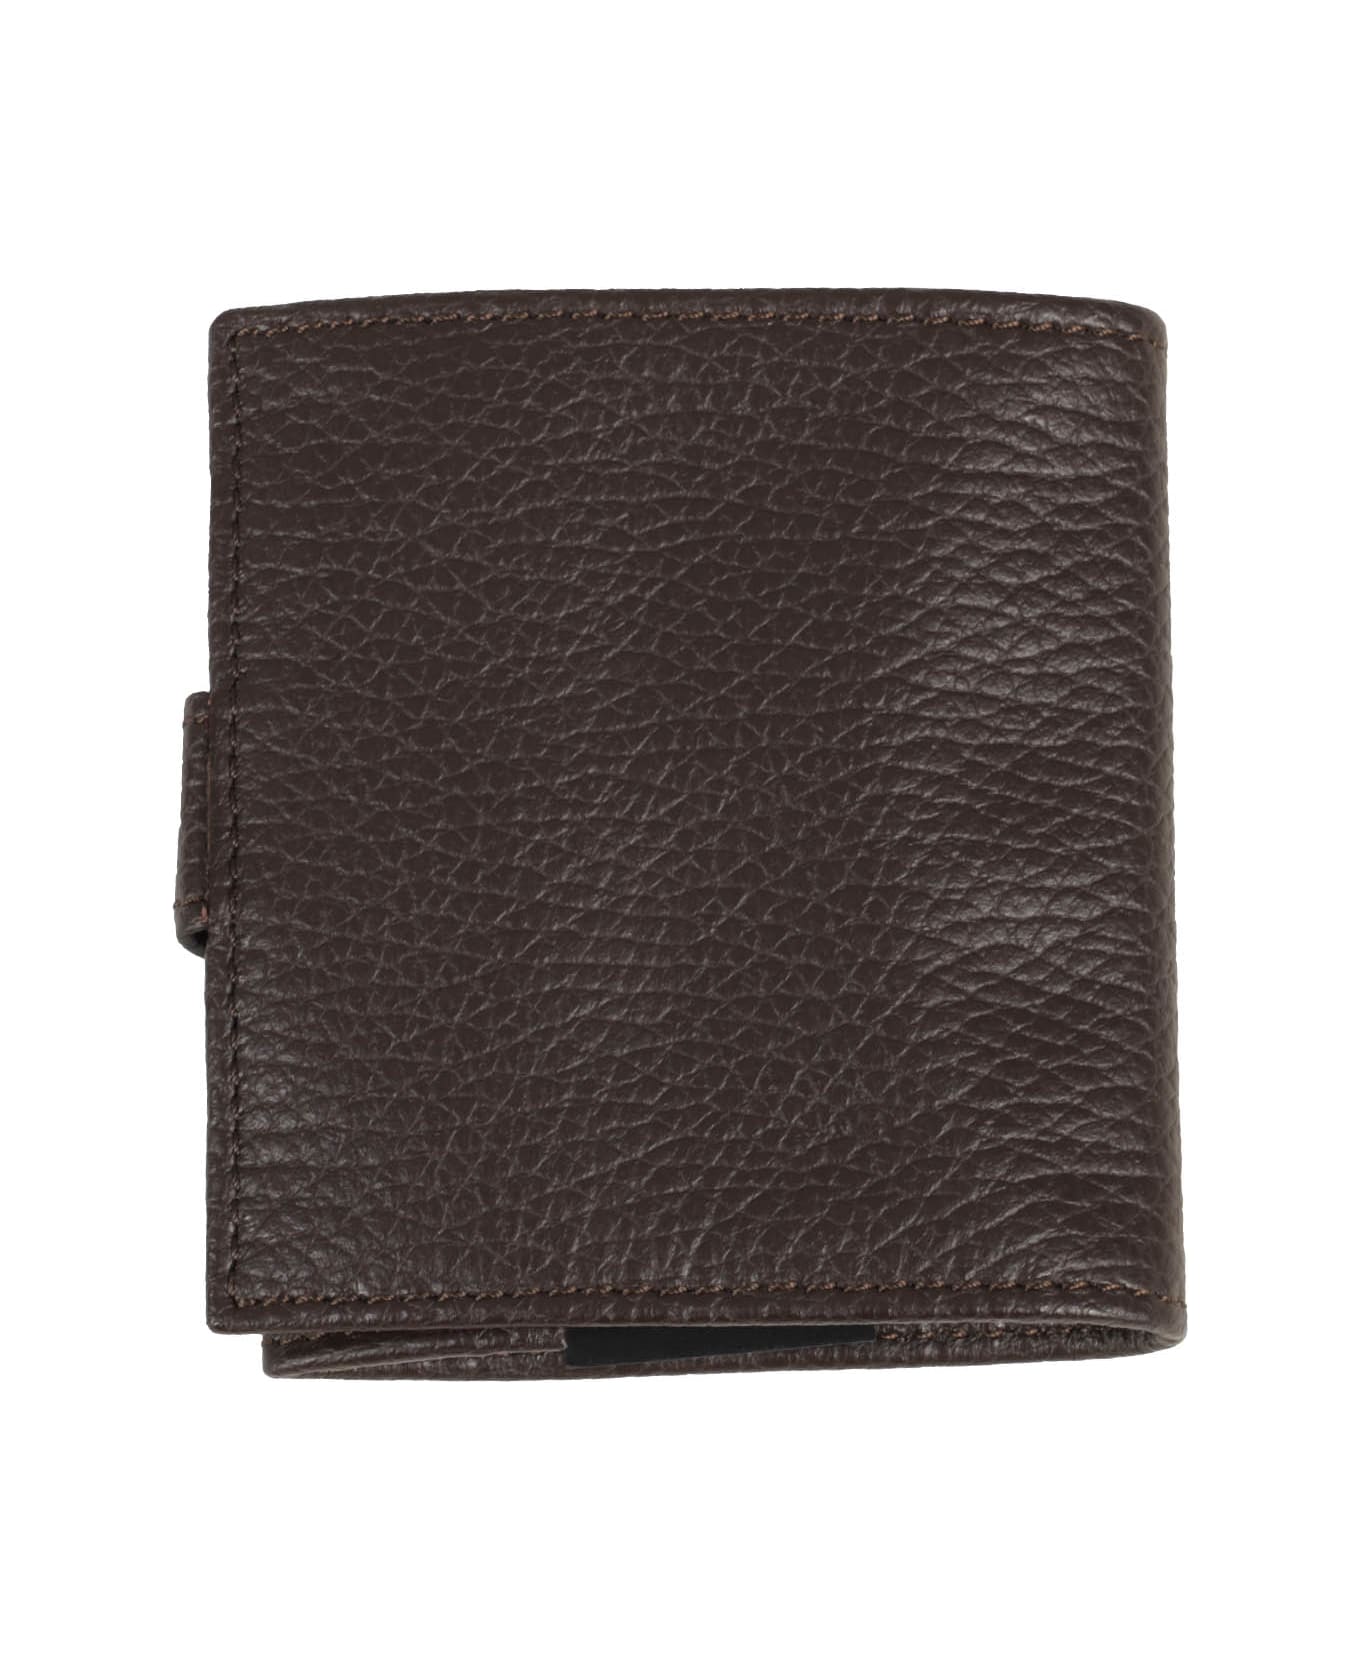 Orciani Leather Wallet - Eba Ebano 財布